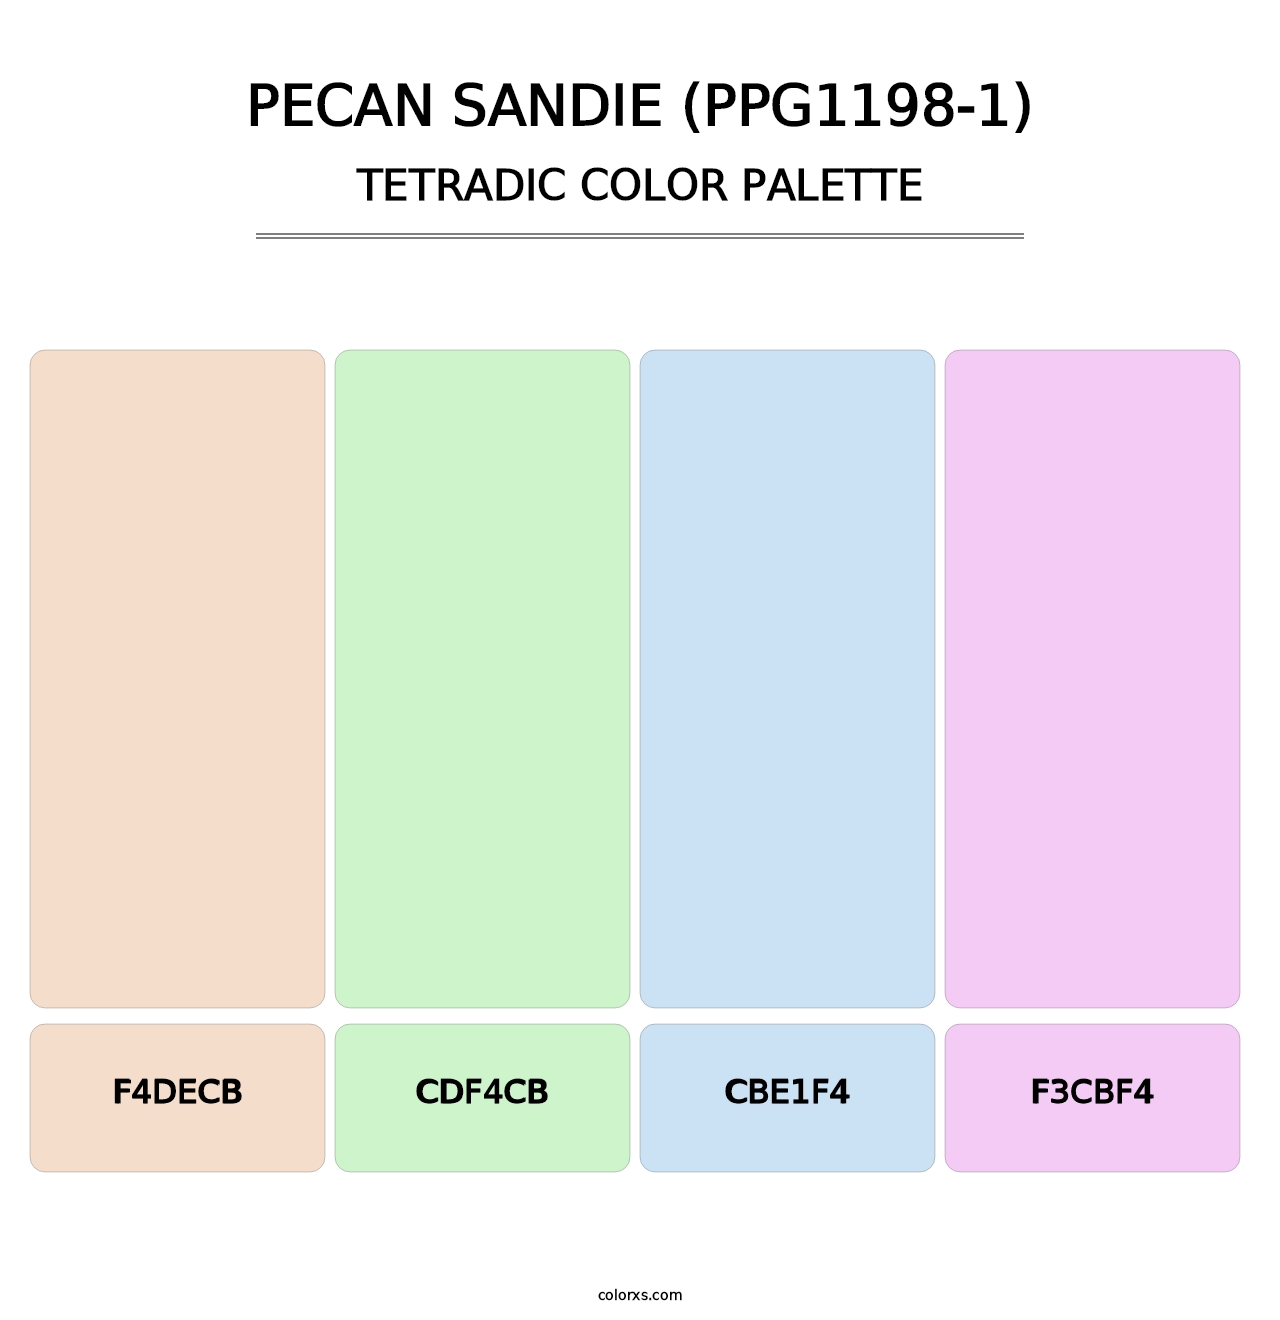 Pecan Sandie (PPG1198-1) - Tetradic Color Palette